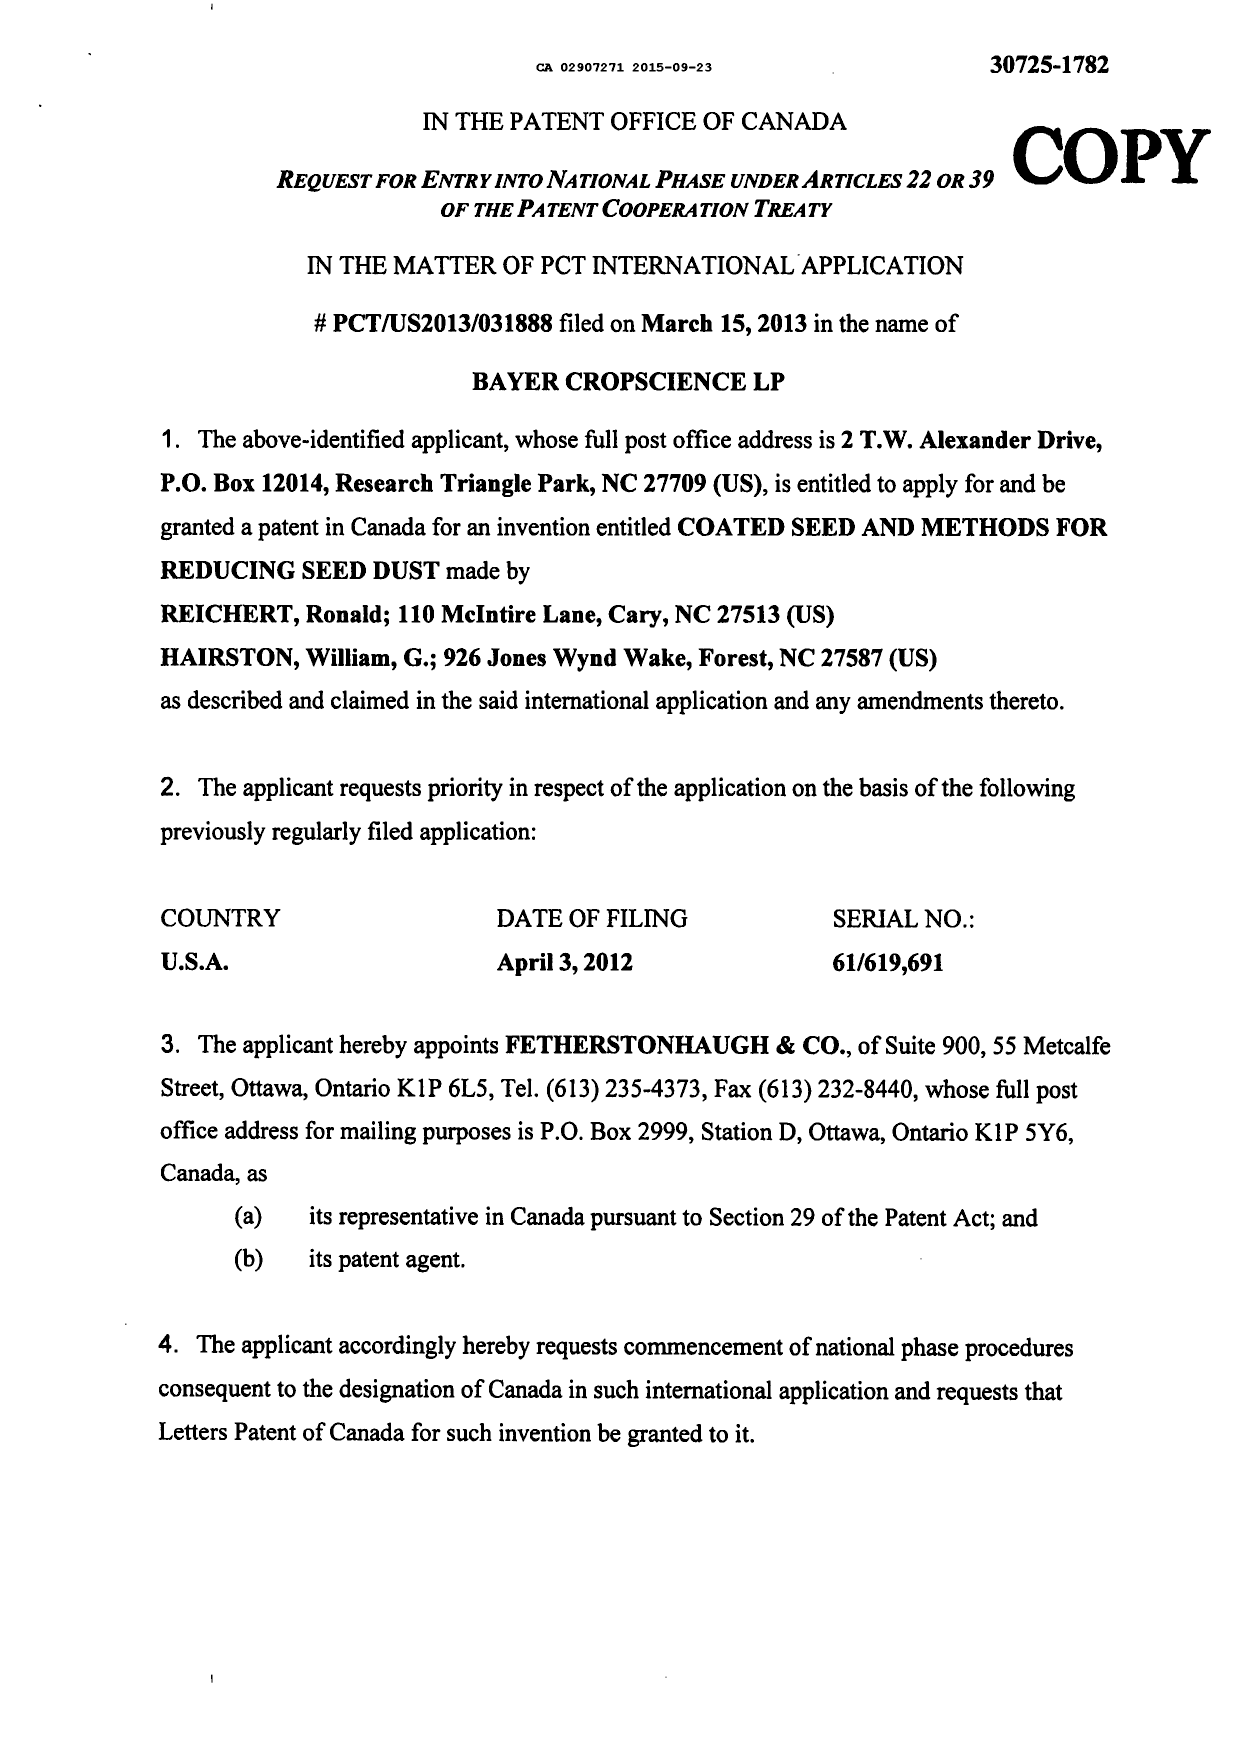 Canadian Patent Document 2907271. Correspondence 20141223. Image 5 of 6